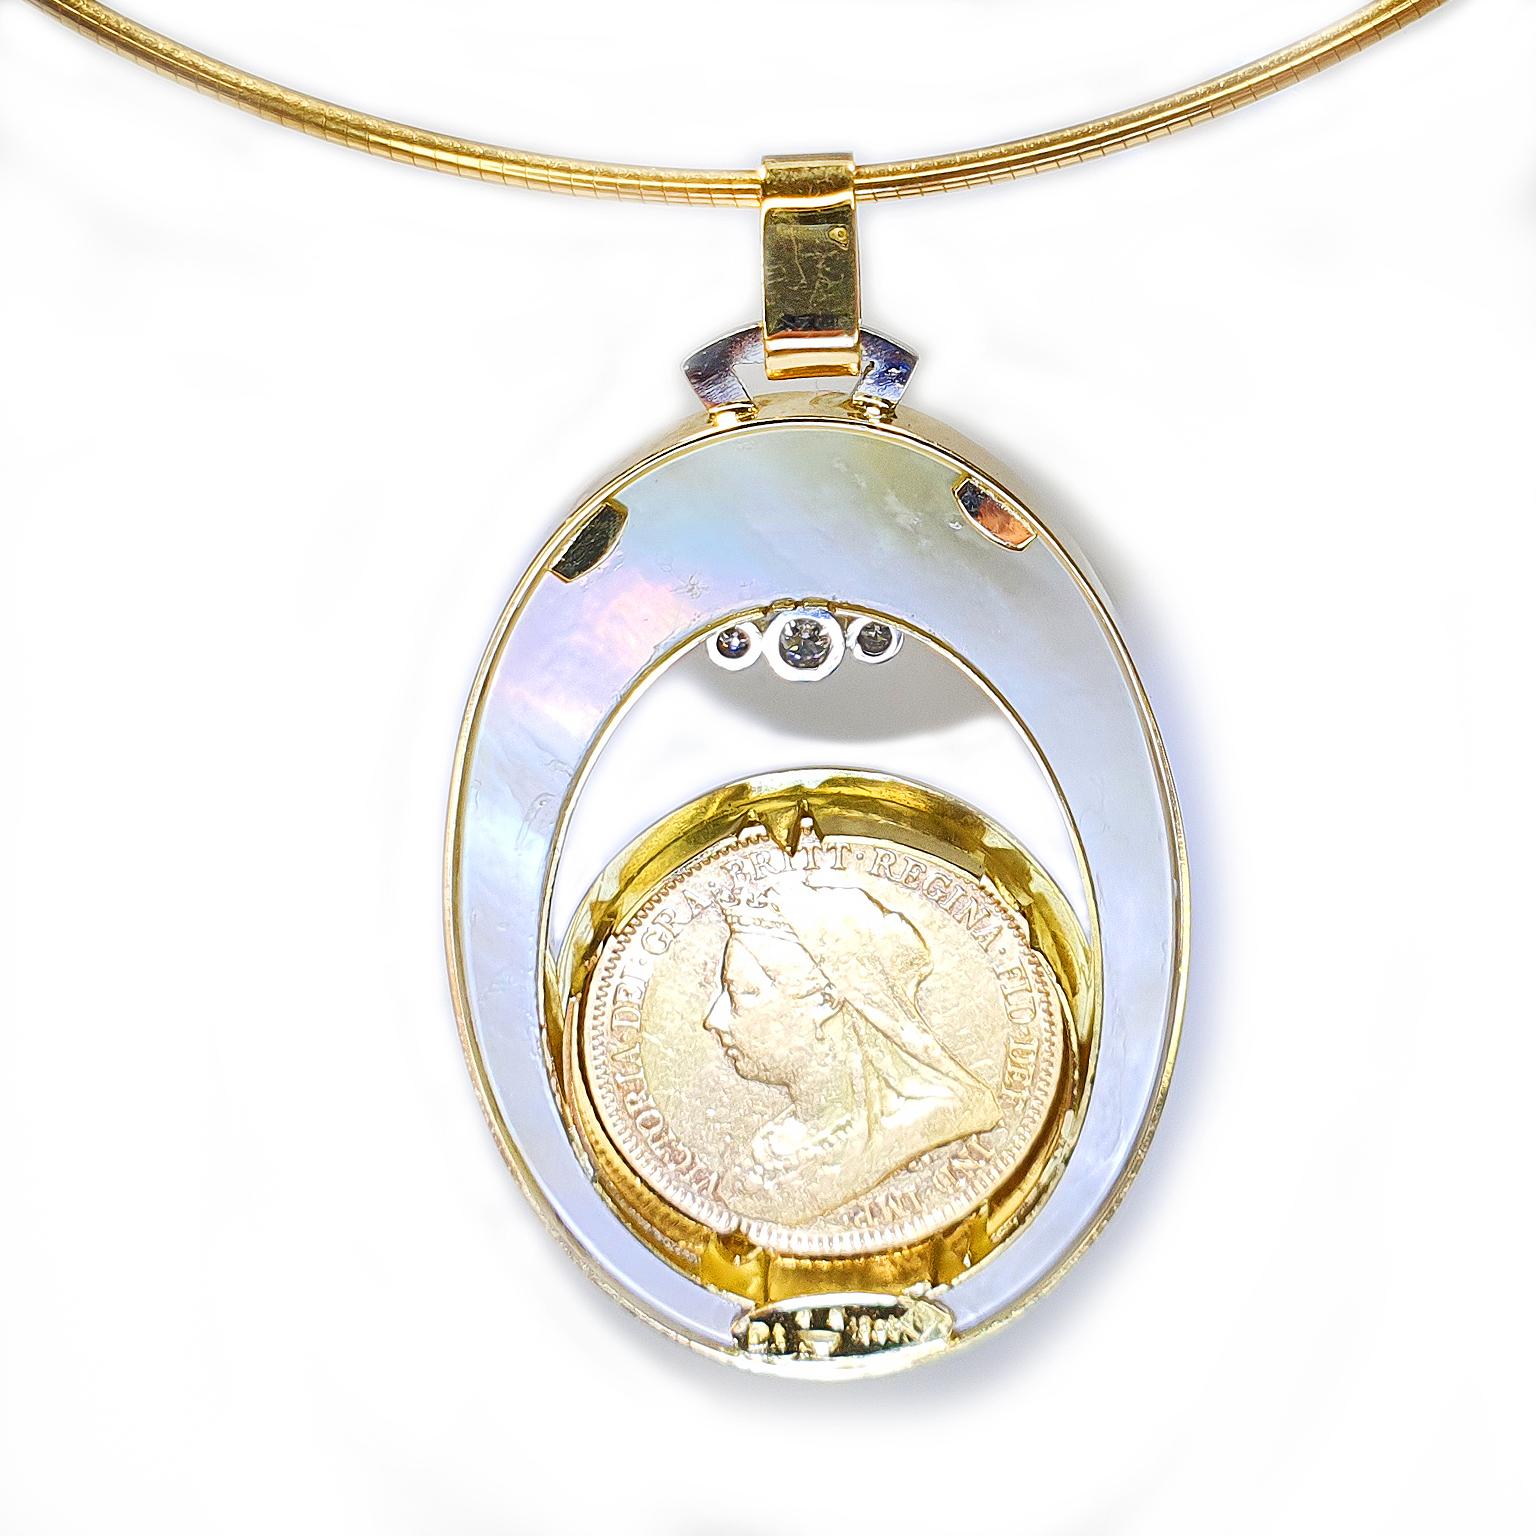 Paul Amey’s Half Sovereign coin pendant with 